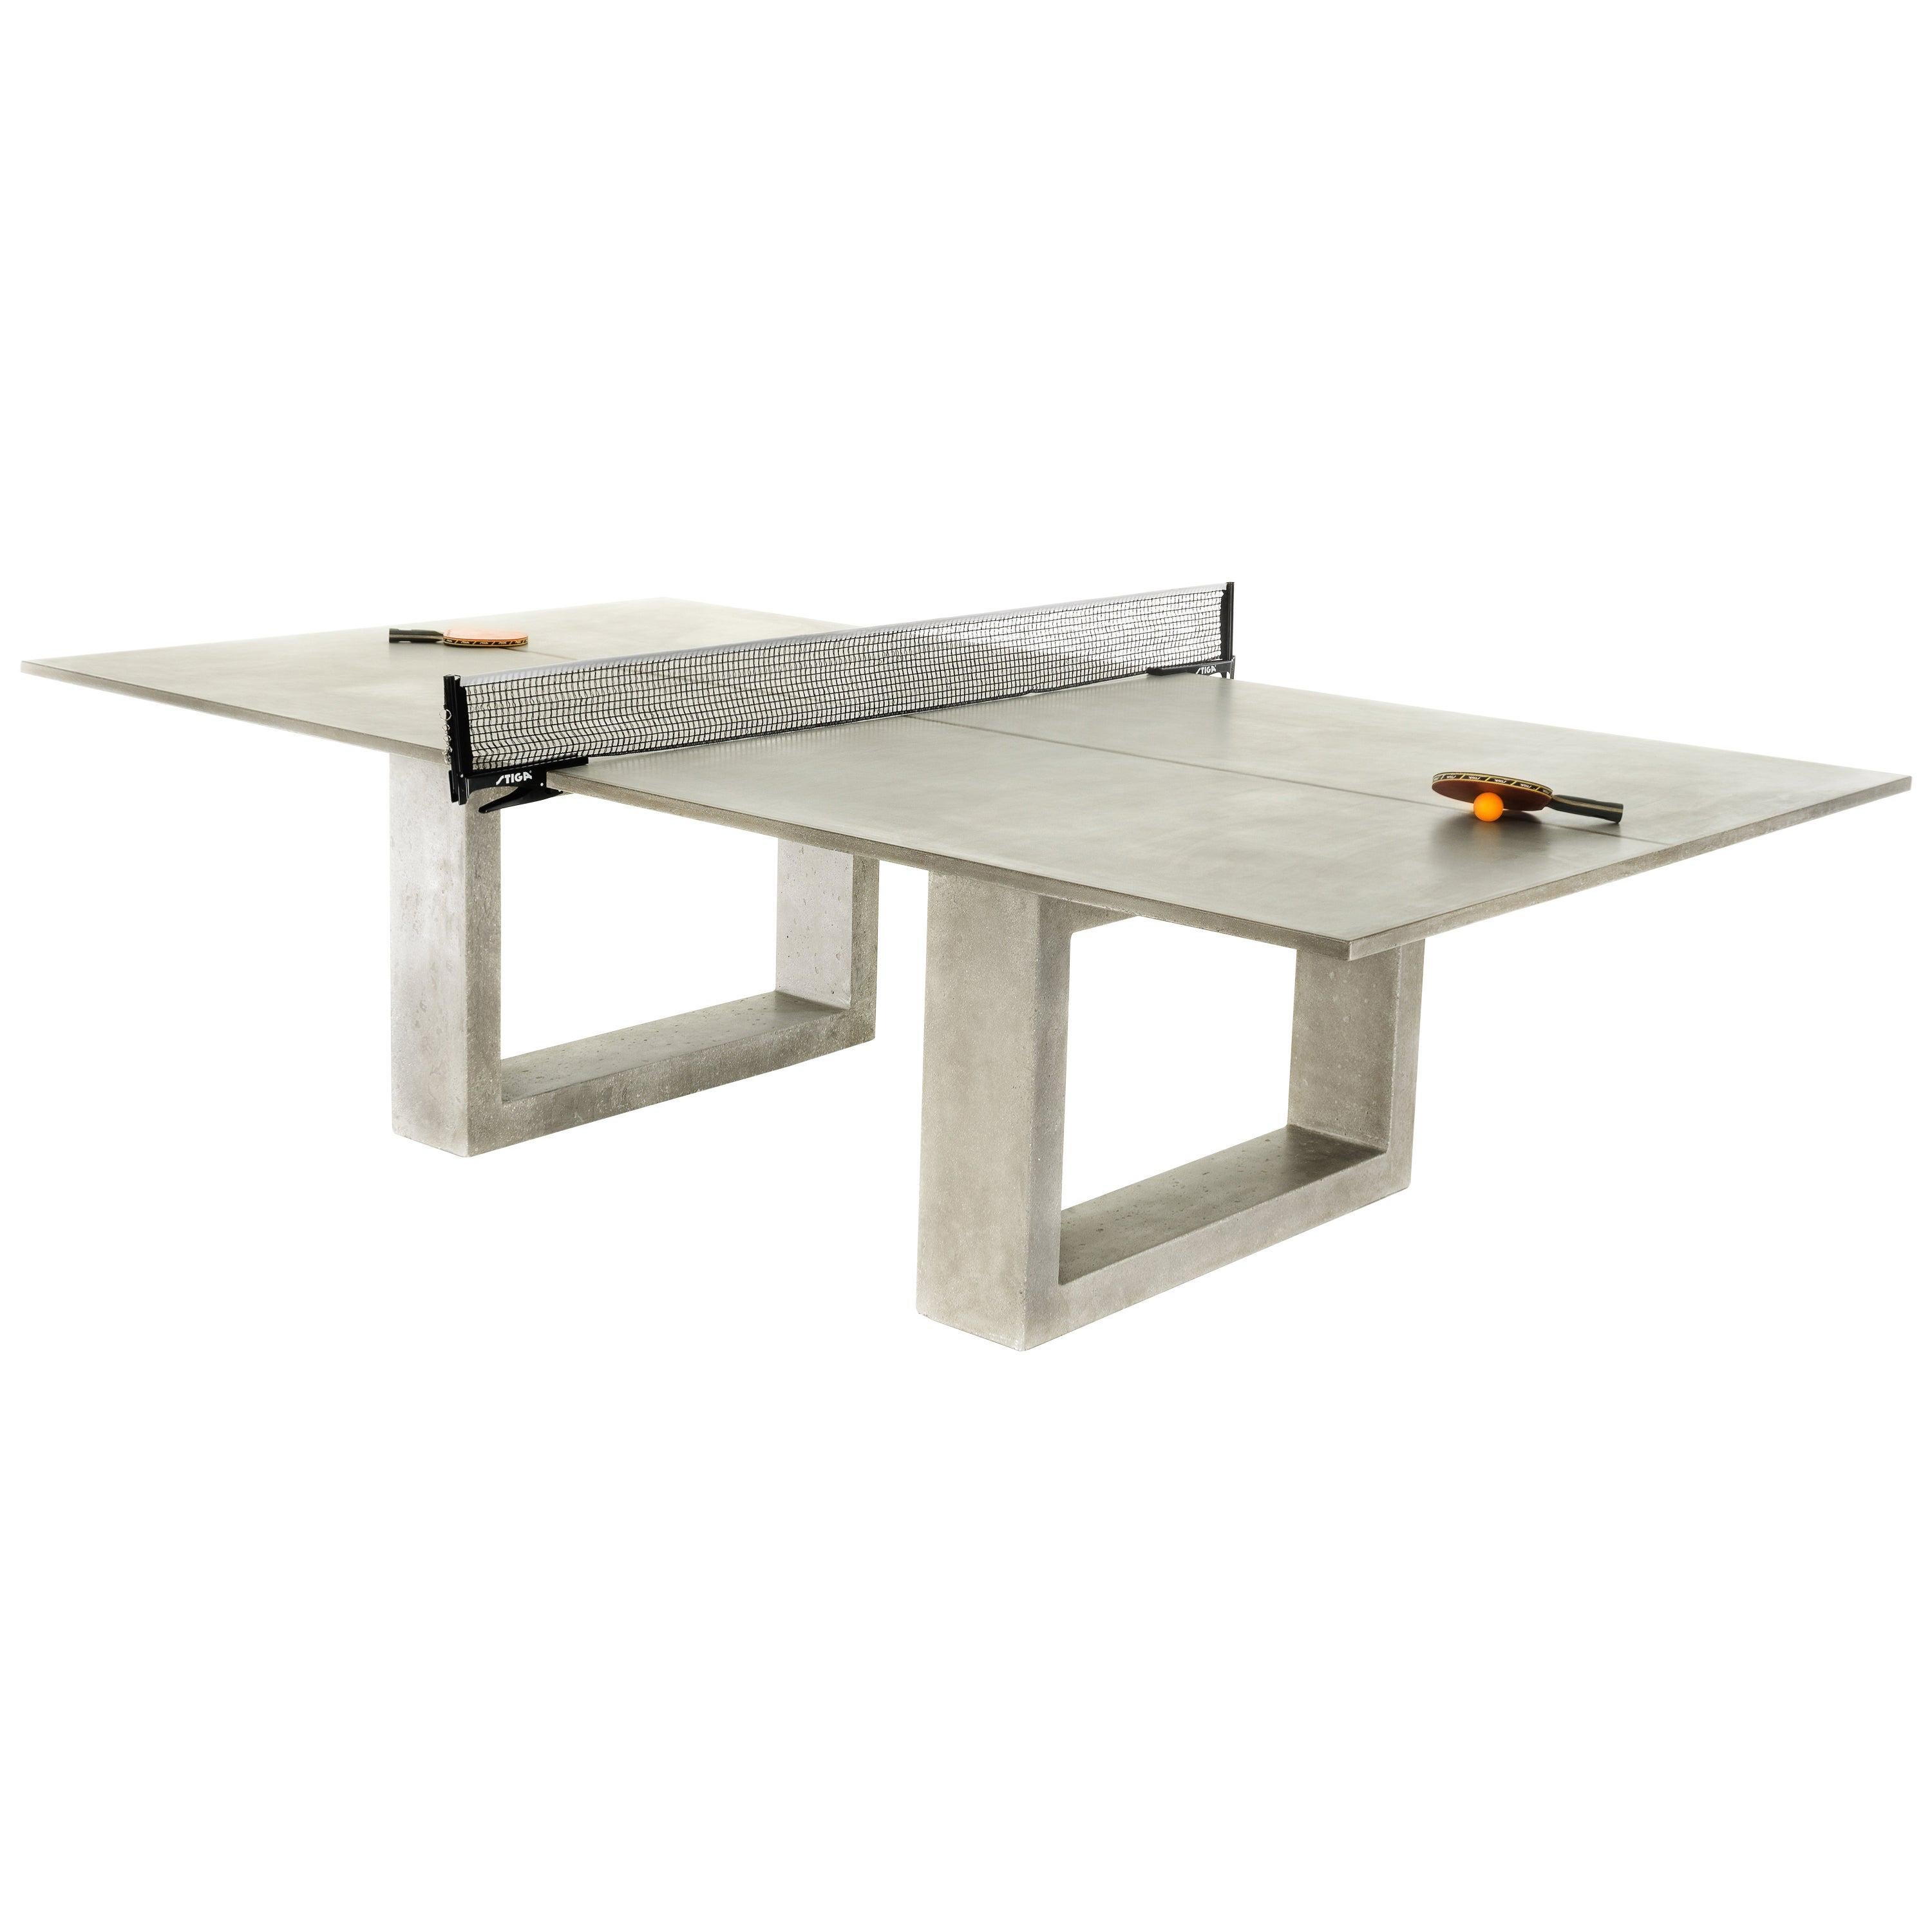 James de Wulf Commercial Concrete Ping Pong Table - Standard Colors